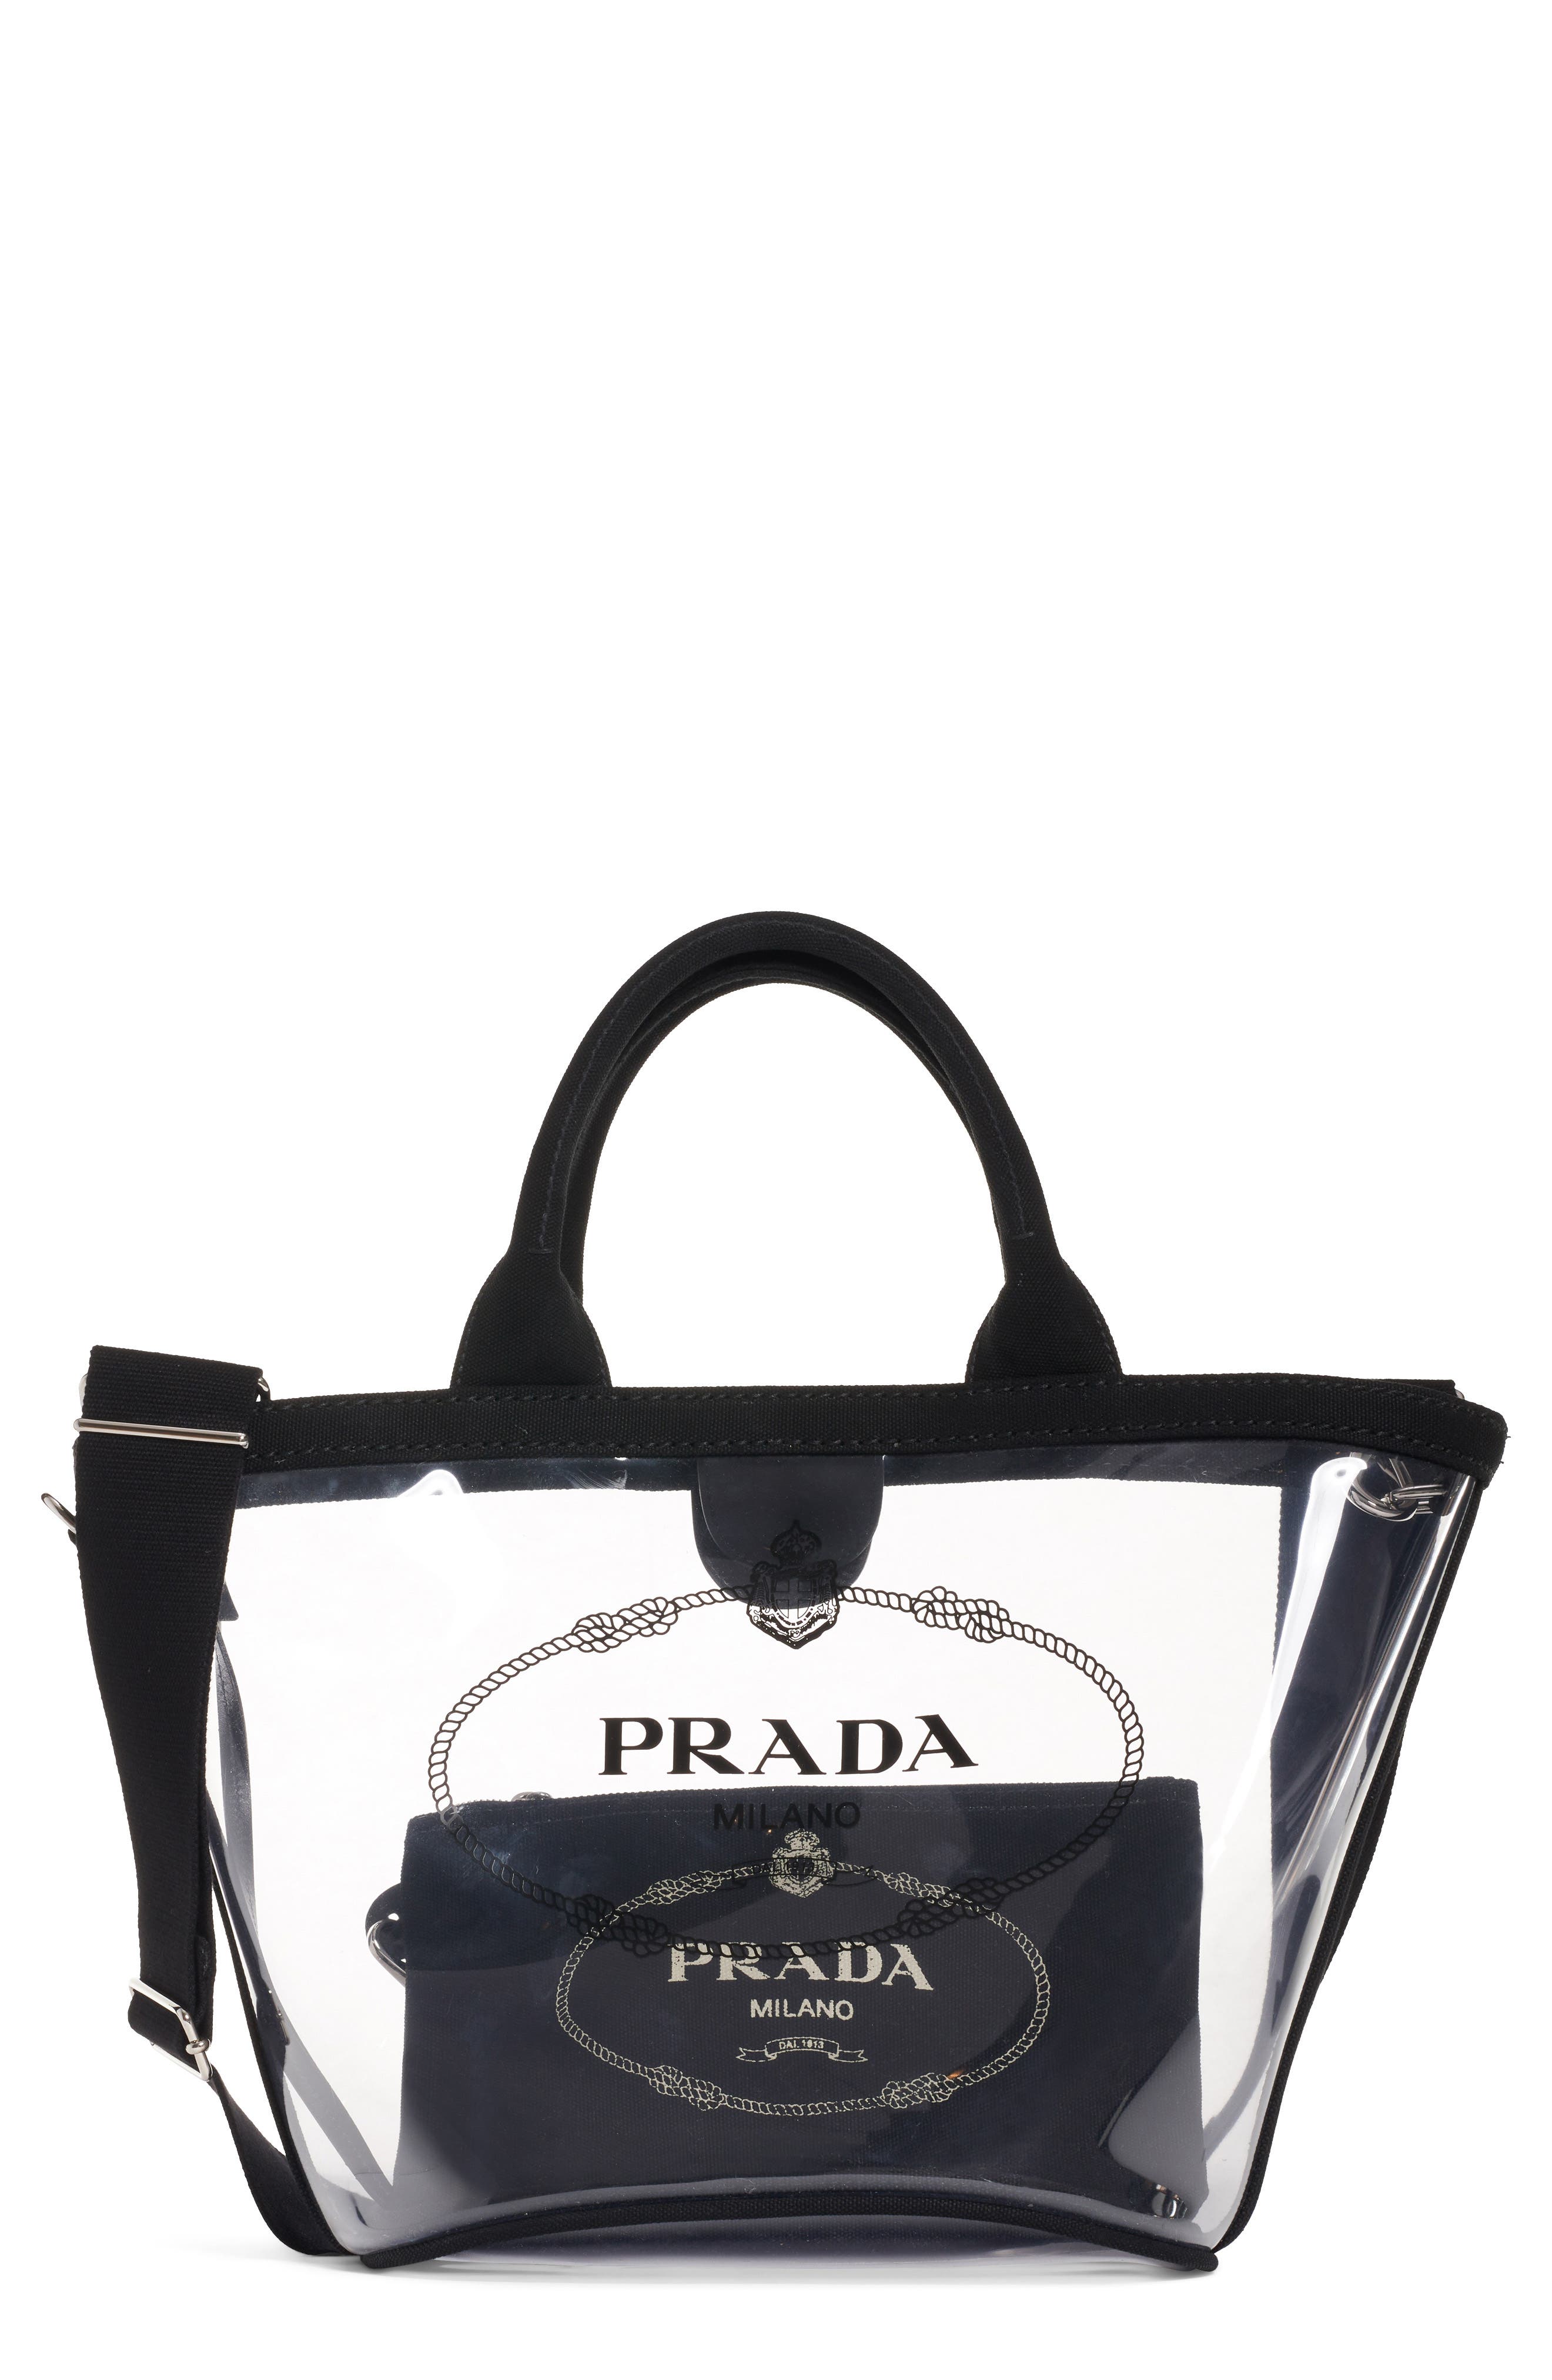 prada beach bag